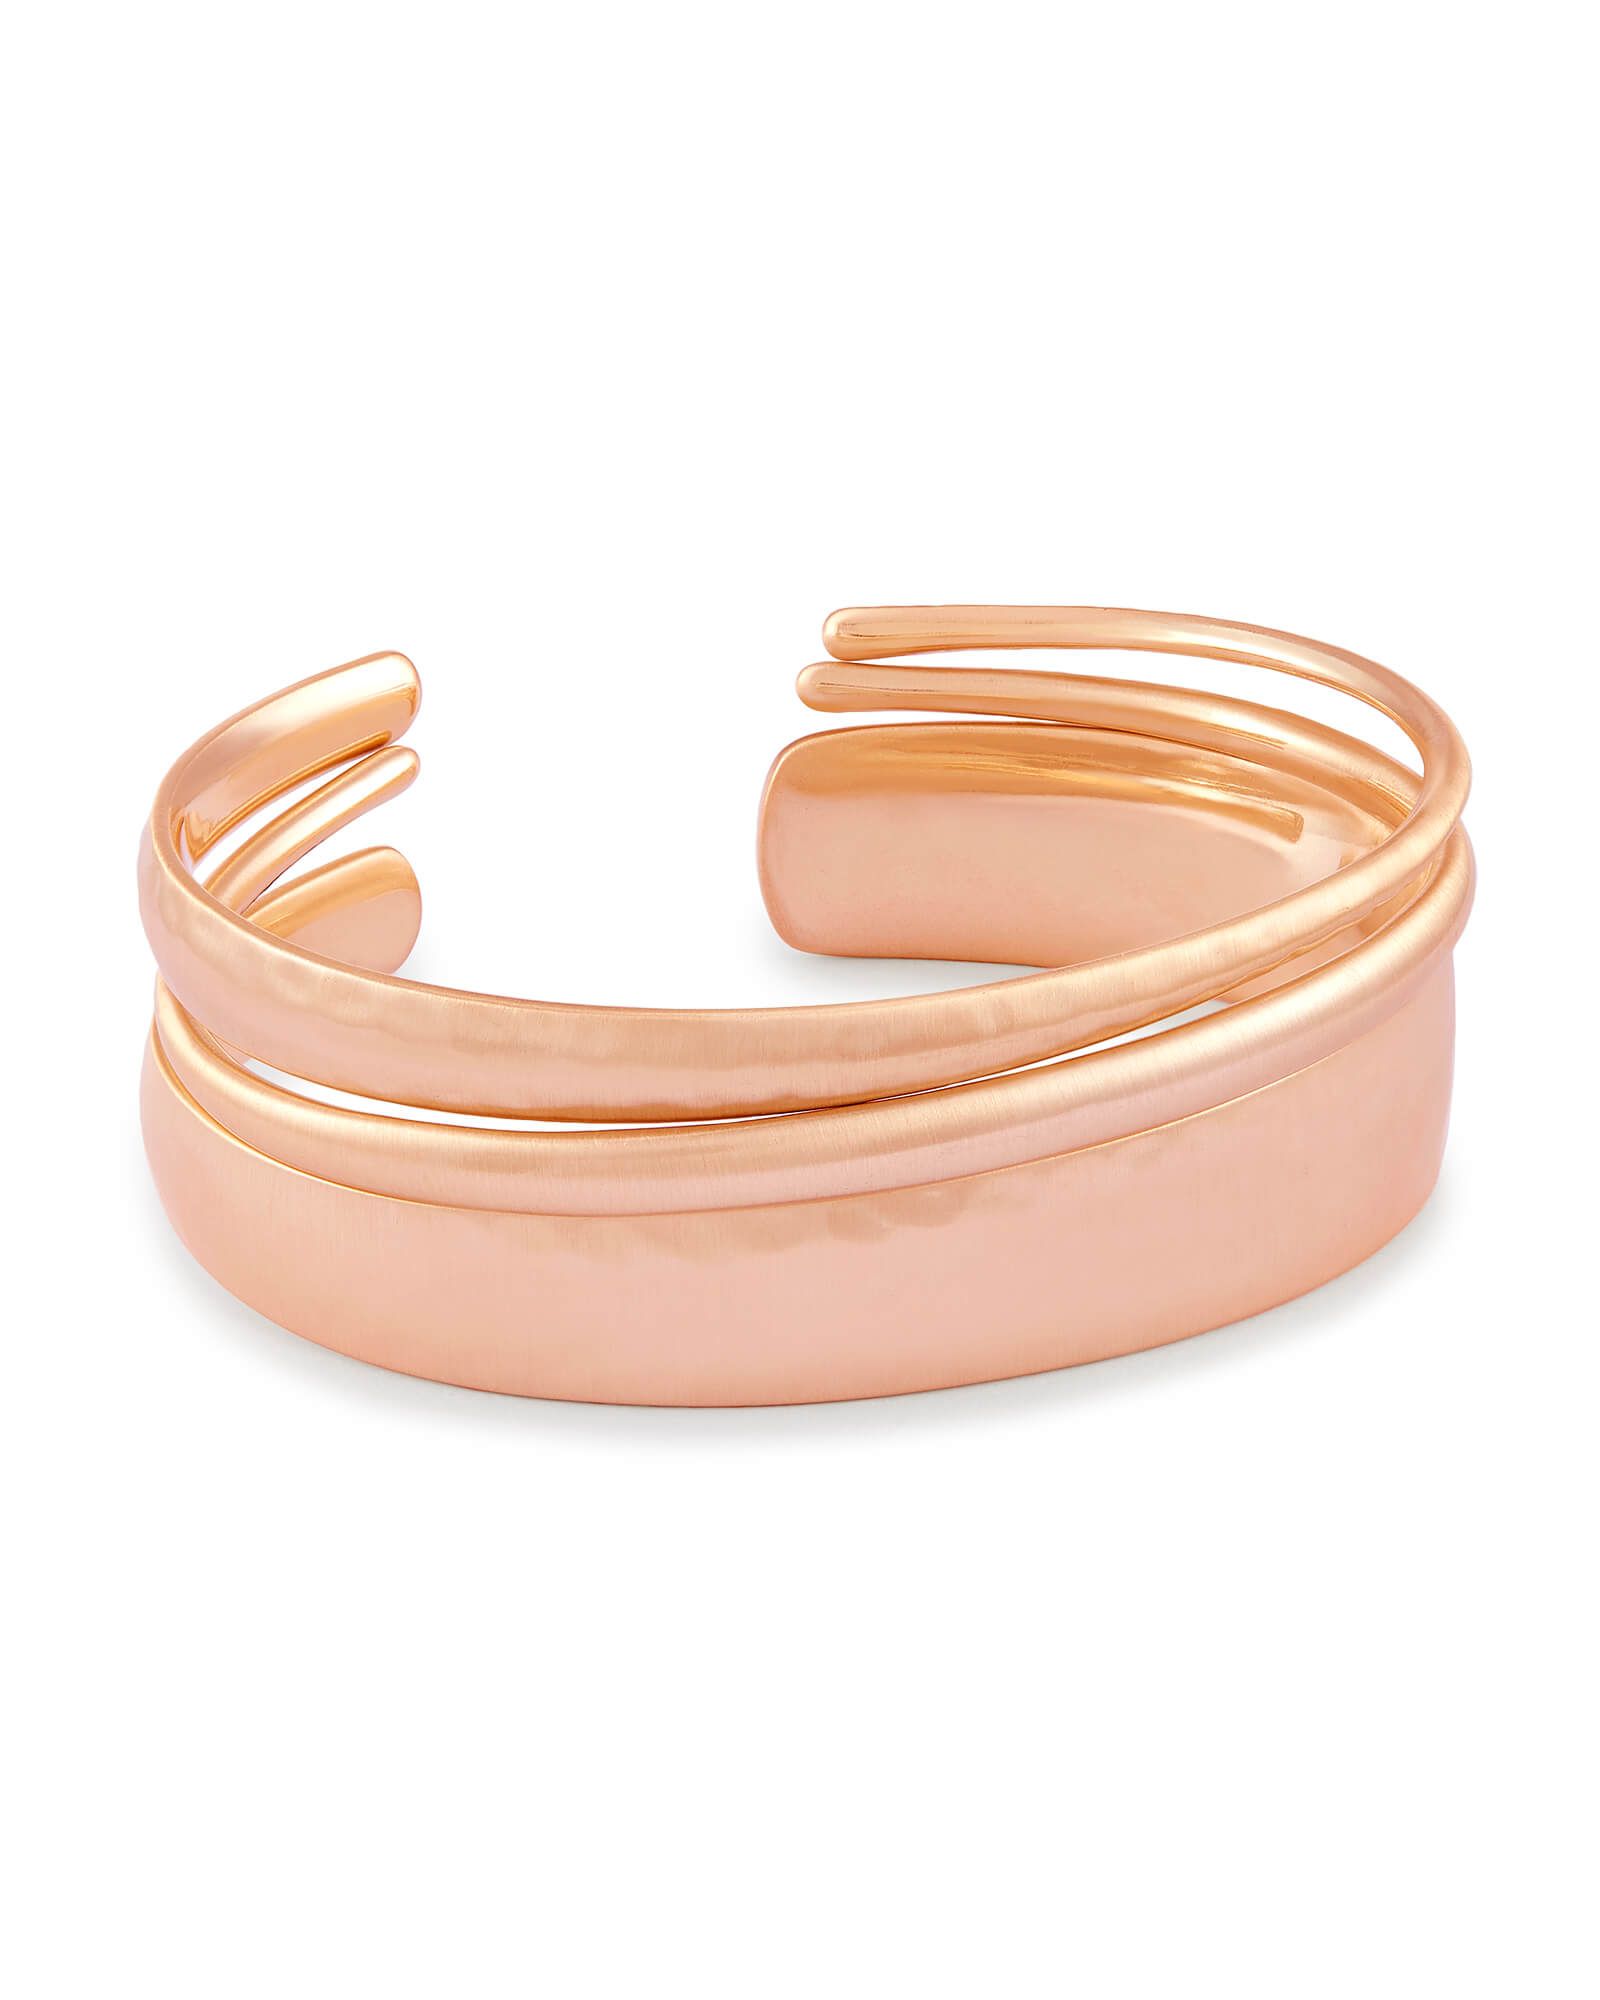 Tiana Pinch Bracelet Set in Rose Gold | Kendra Scott